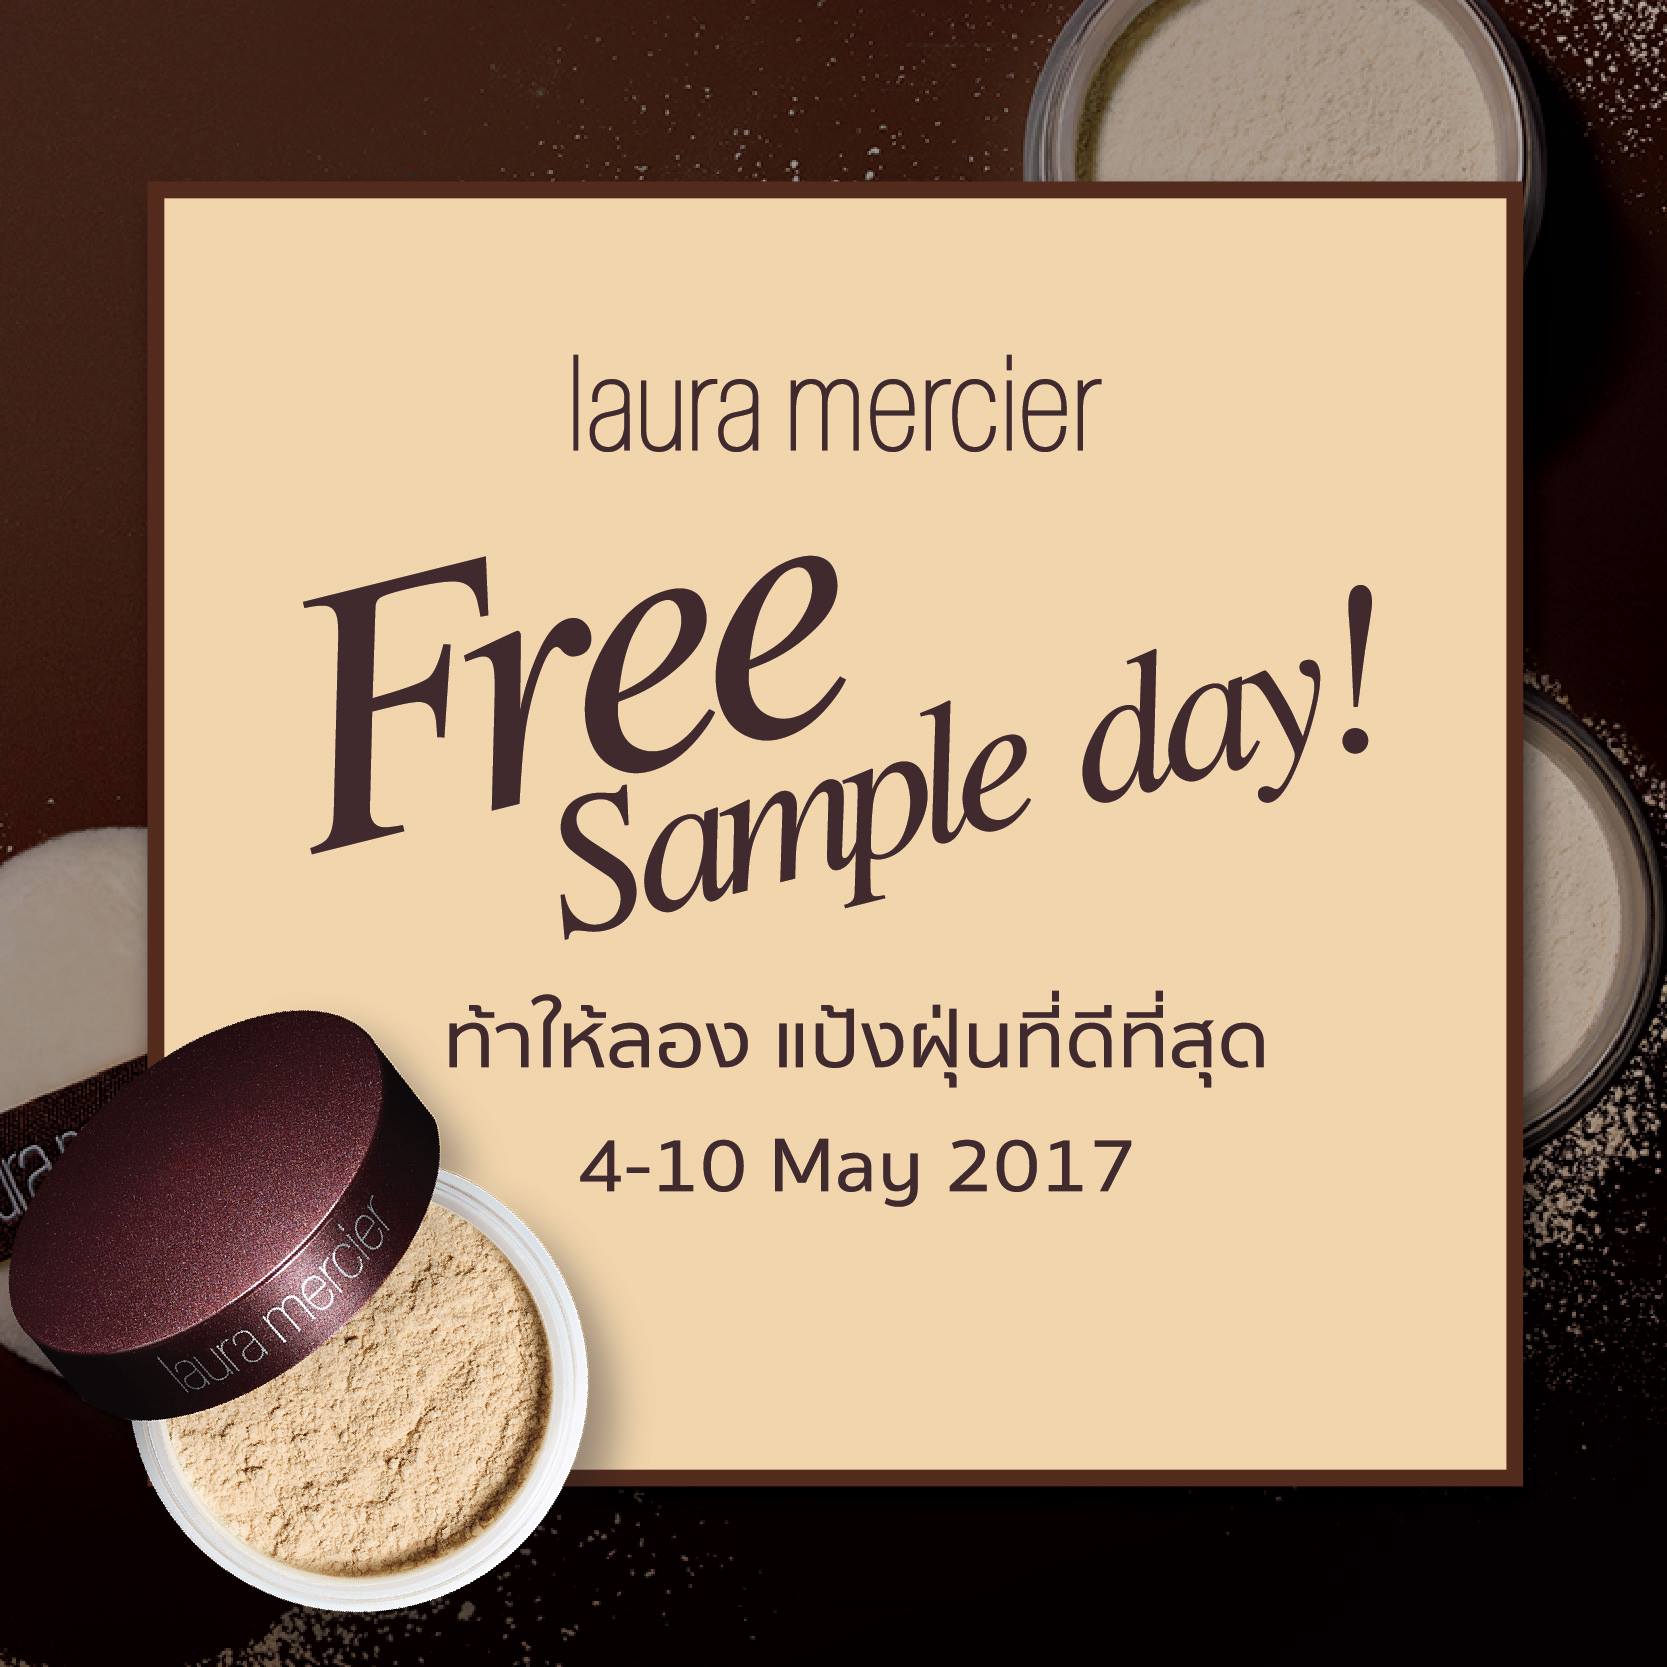 Laura Mercier "FREE SAMPLE DAY"